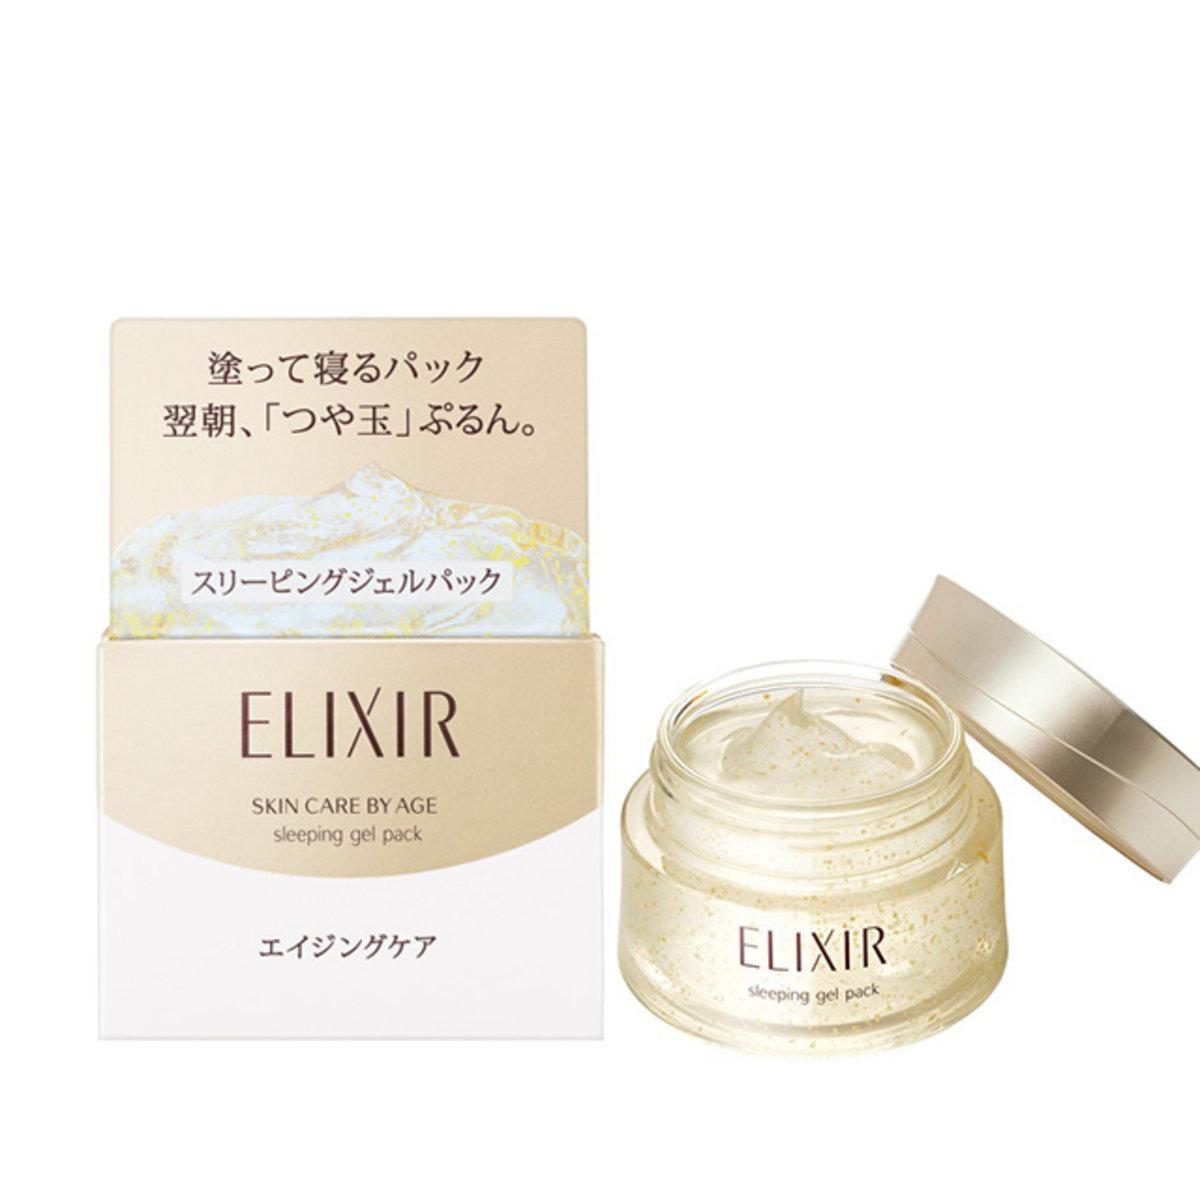 shiseido-elixir-superieur-sleeping-gel-pack-105g